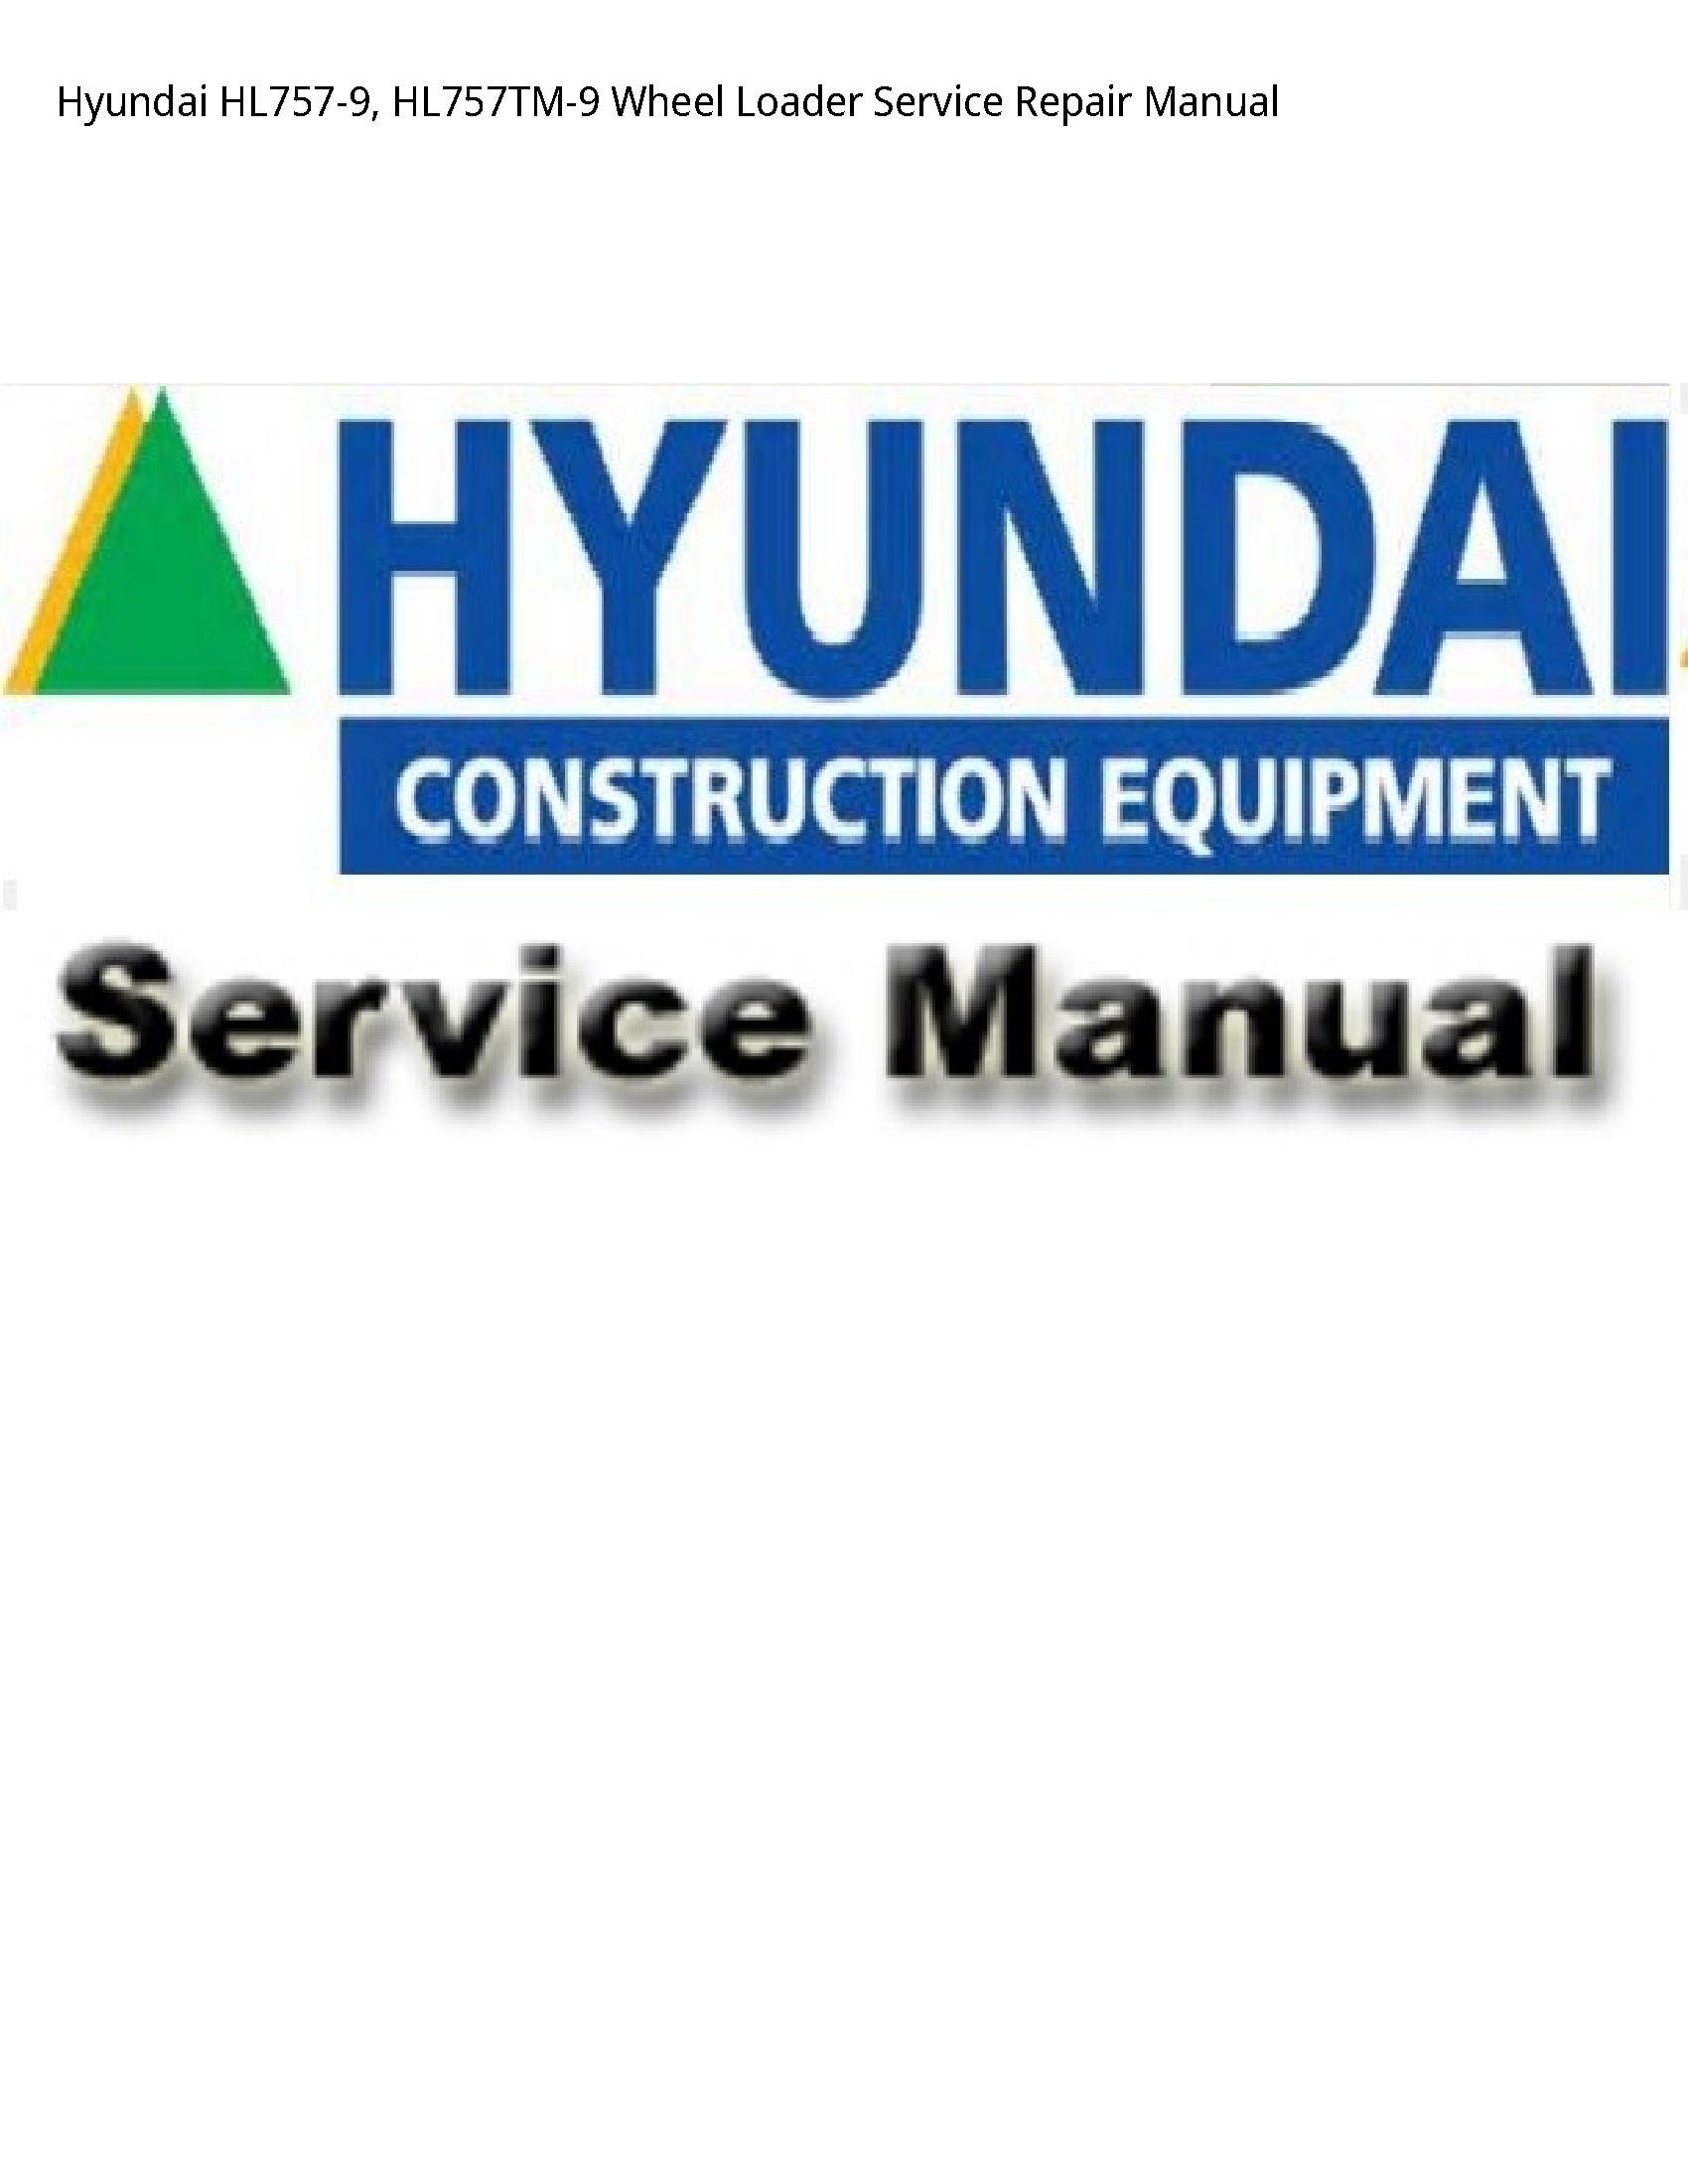 Hyundai HL757-9 Wheel Loader manual